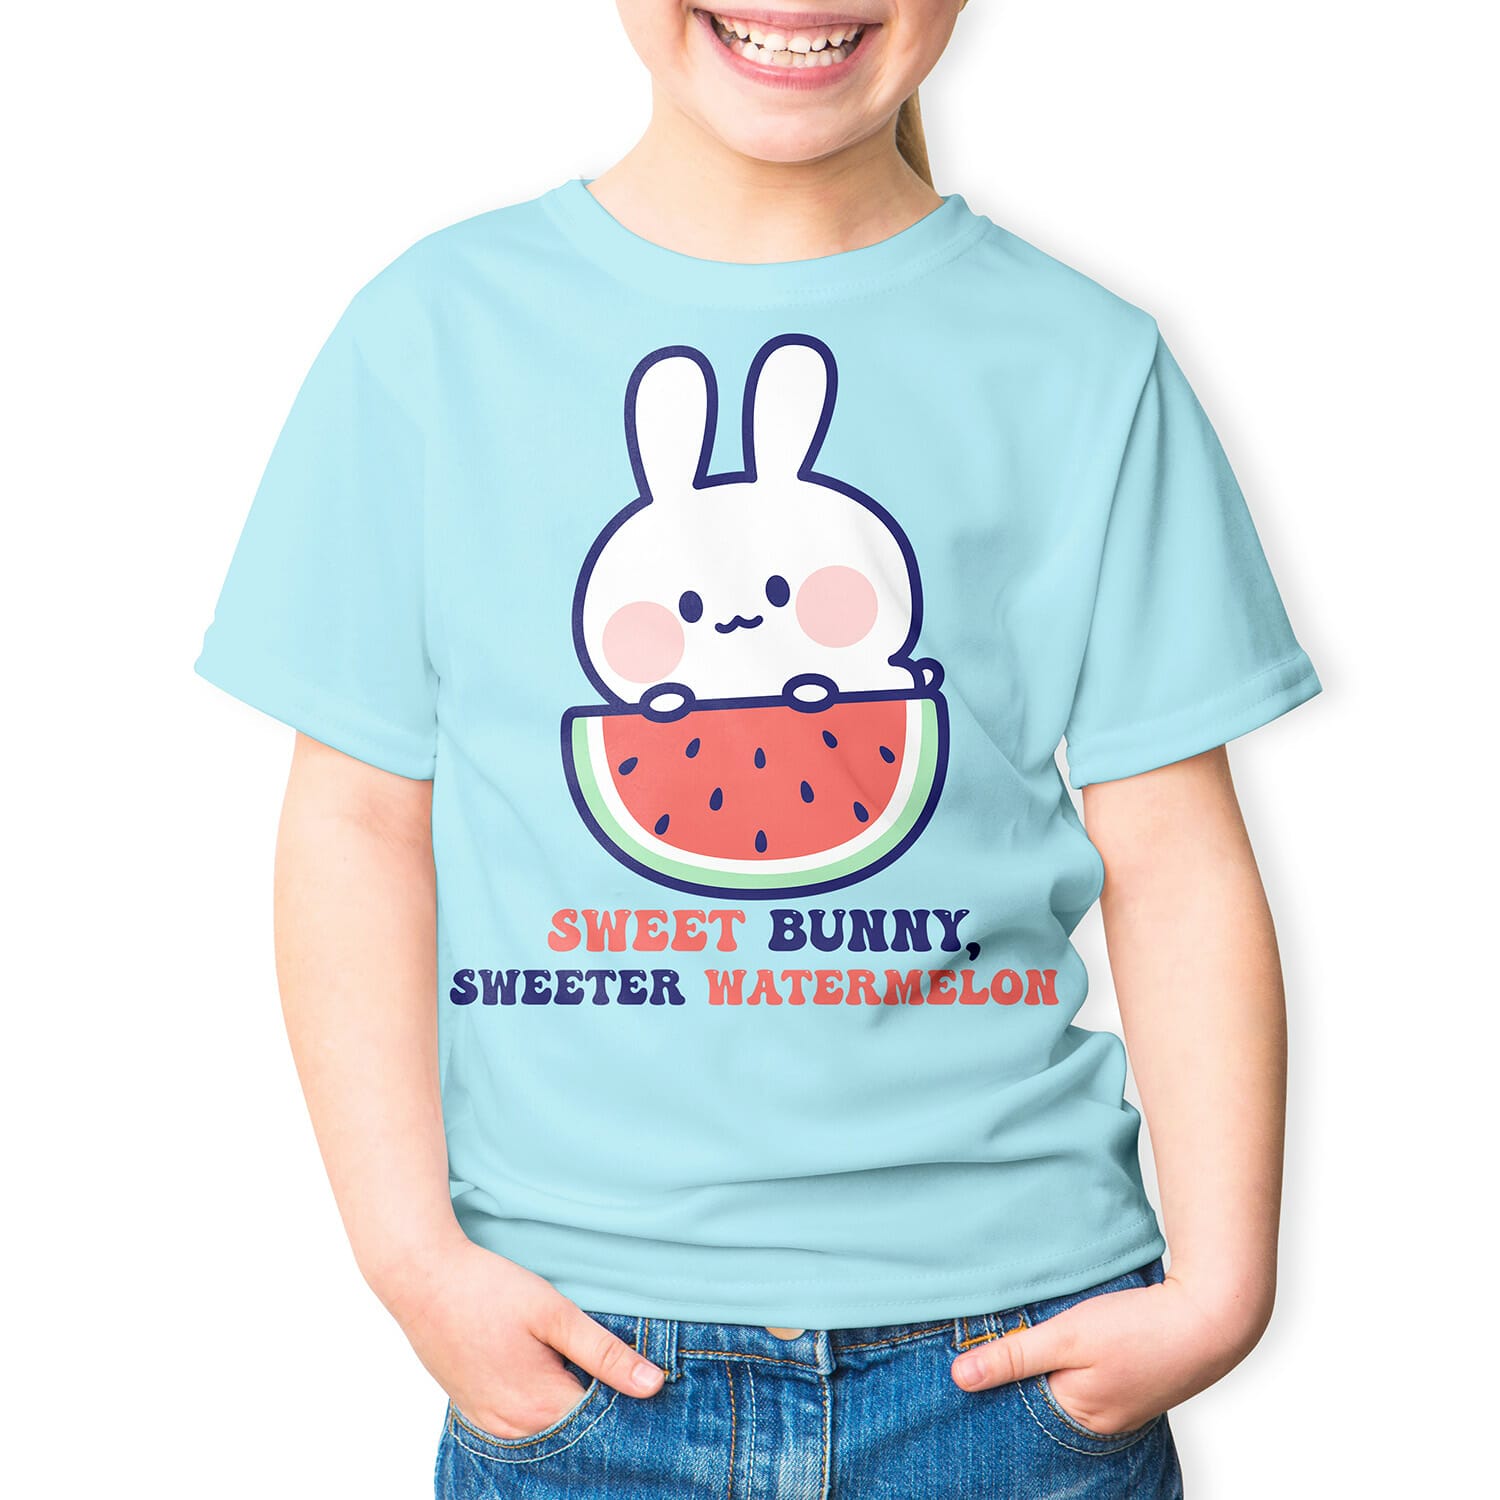 Sweet Bunny, Sweeter Watermelon Kids Tshirt Design